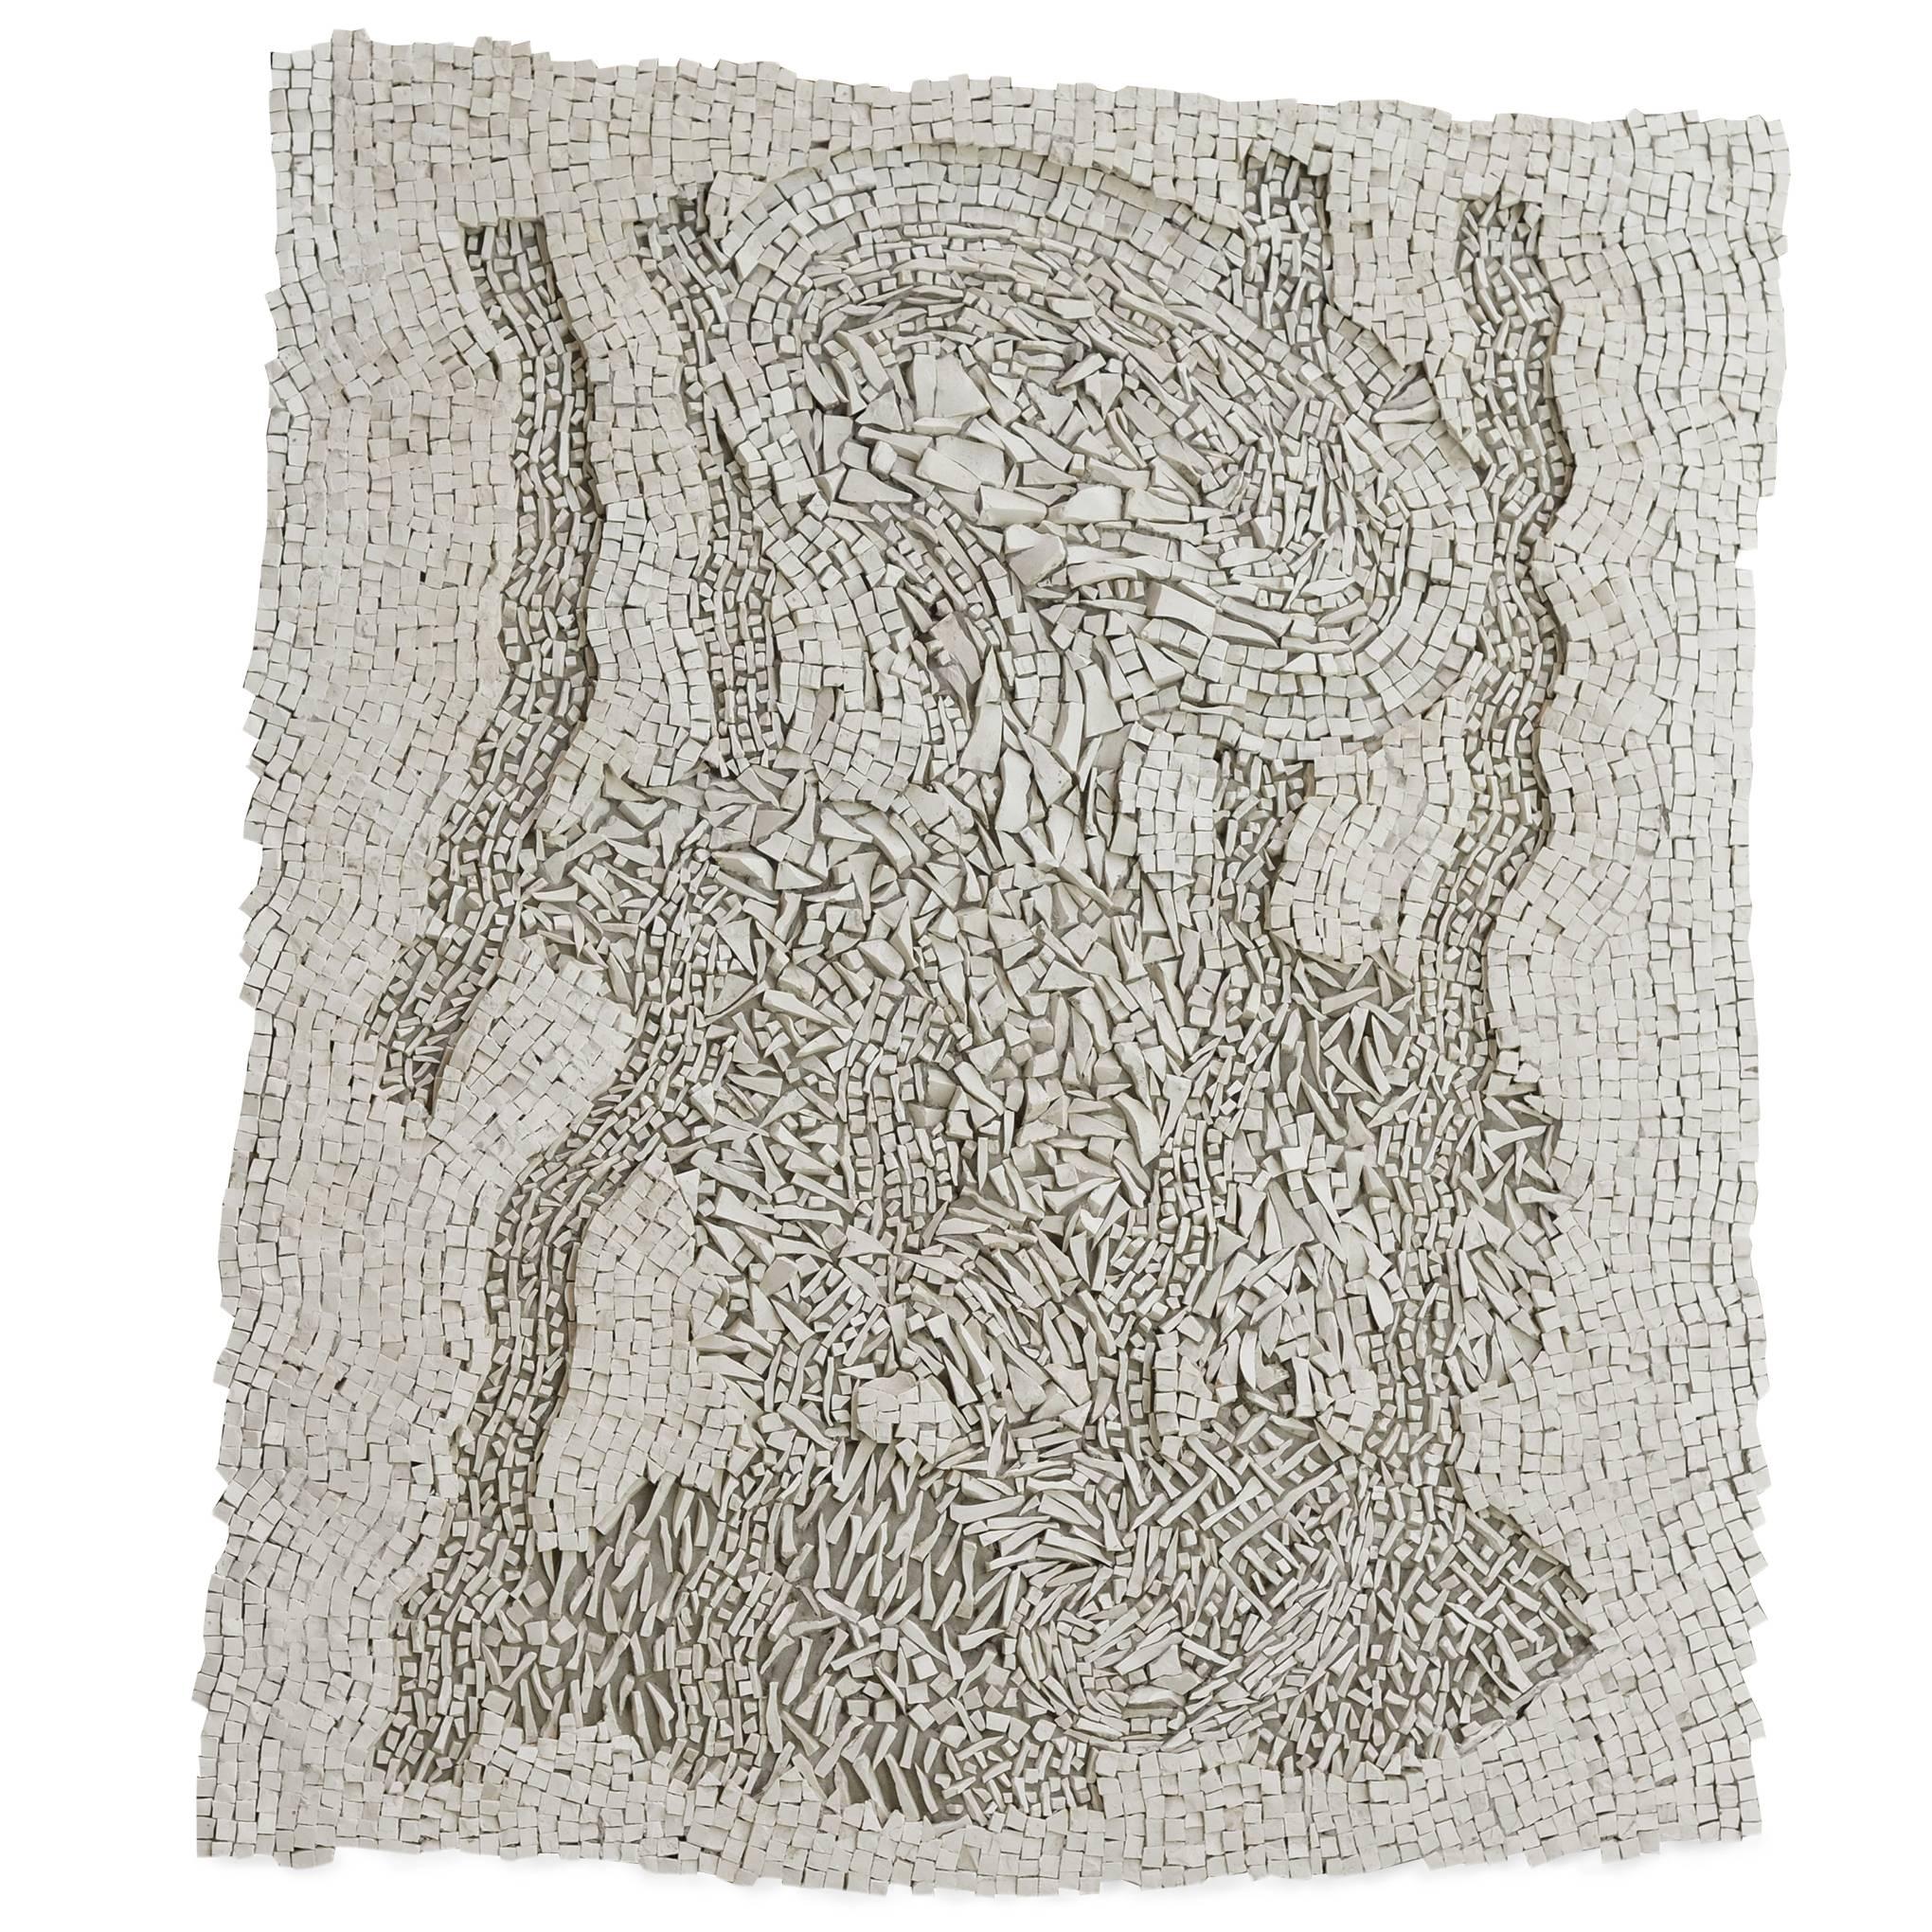 "Veiled in a Haze" Mosaic by Toyoharu Kii